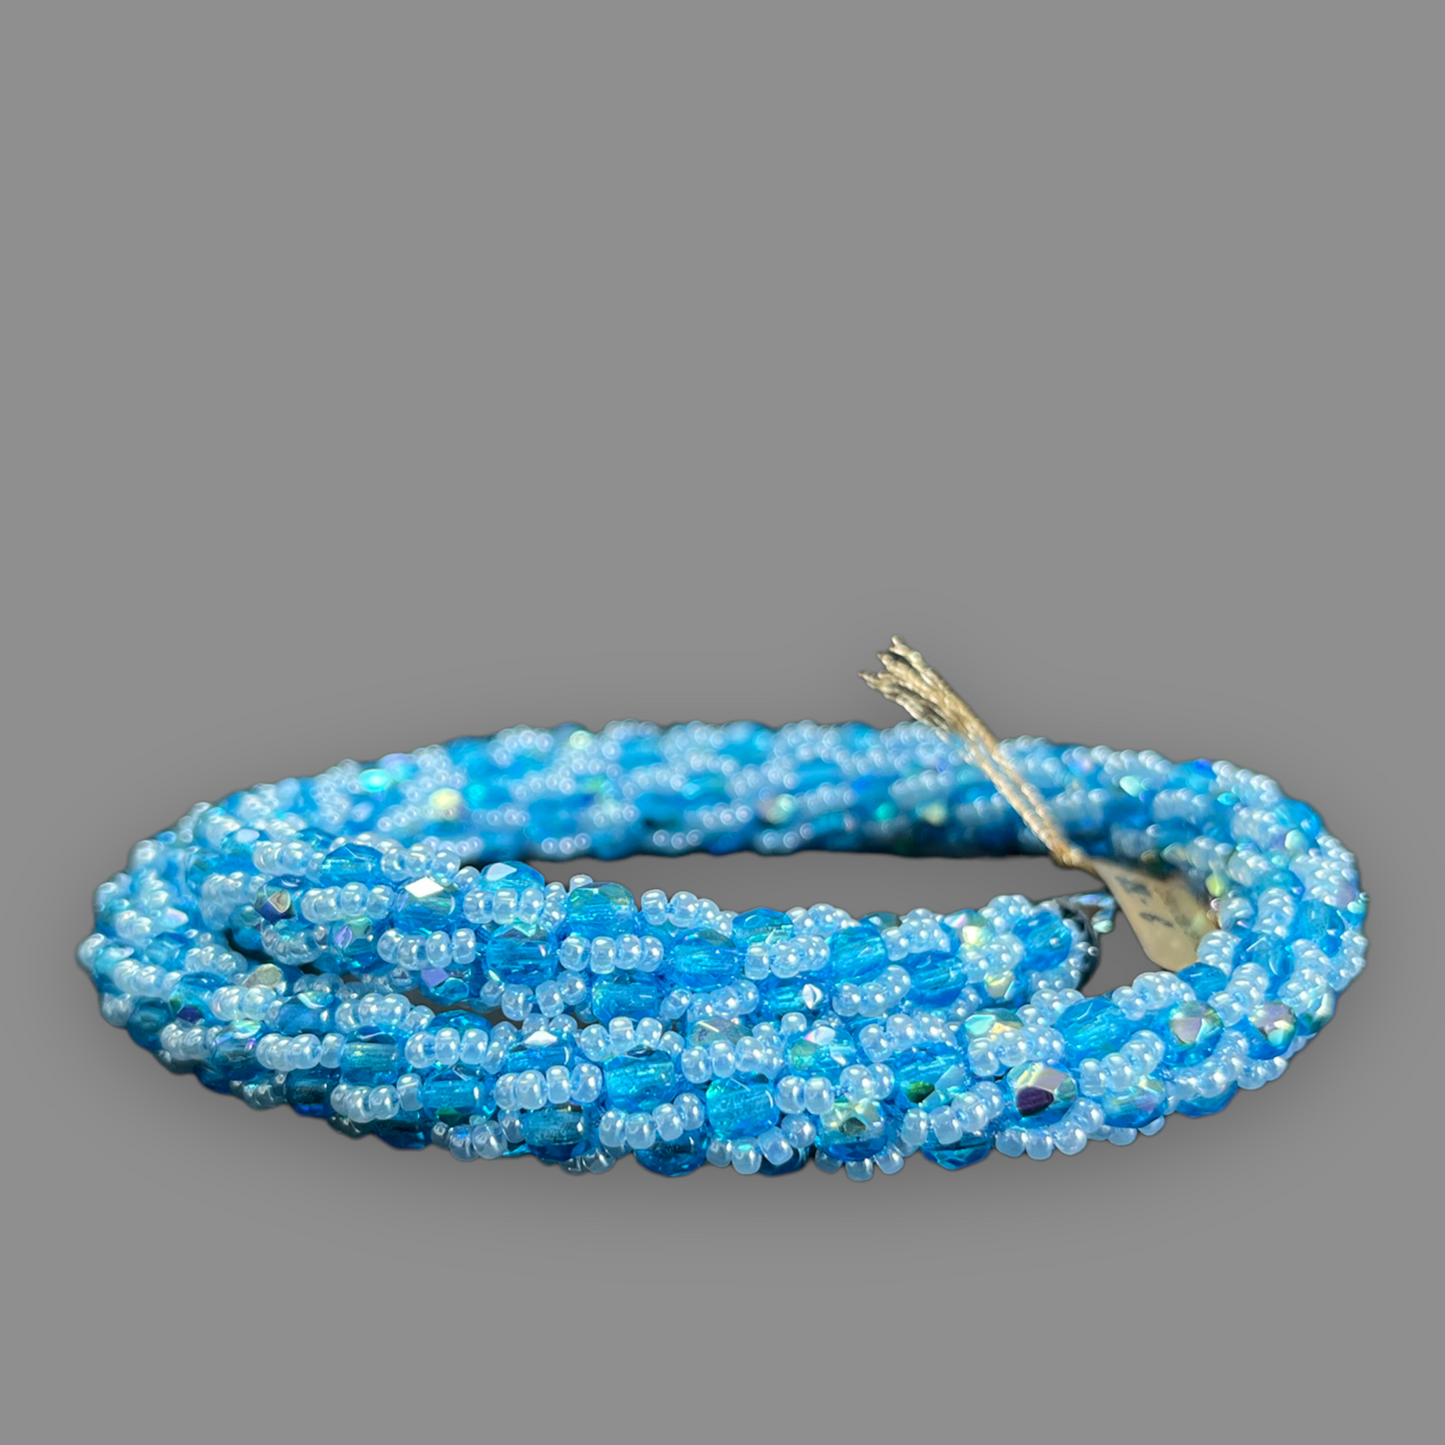 Collier spirale au crochet en perles Miyuki, bleu claire AB, 46 cm